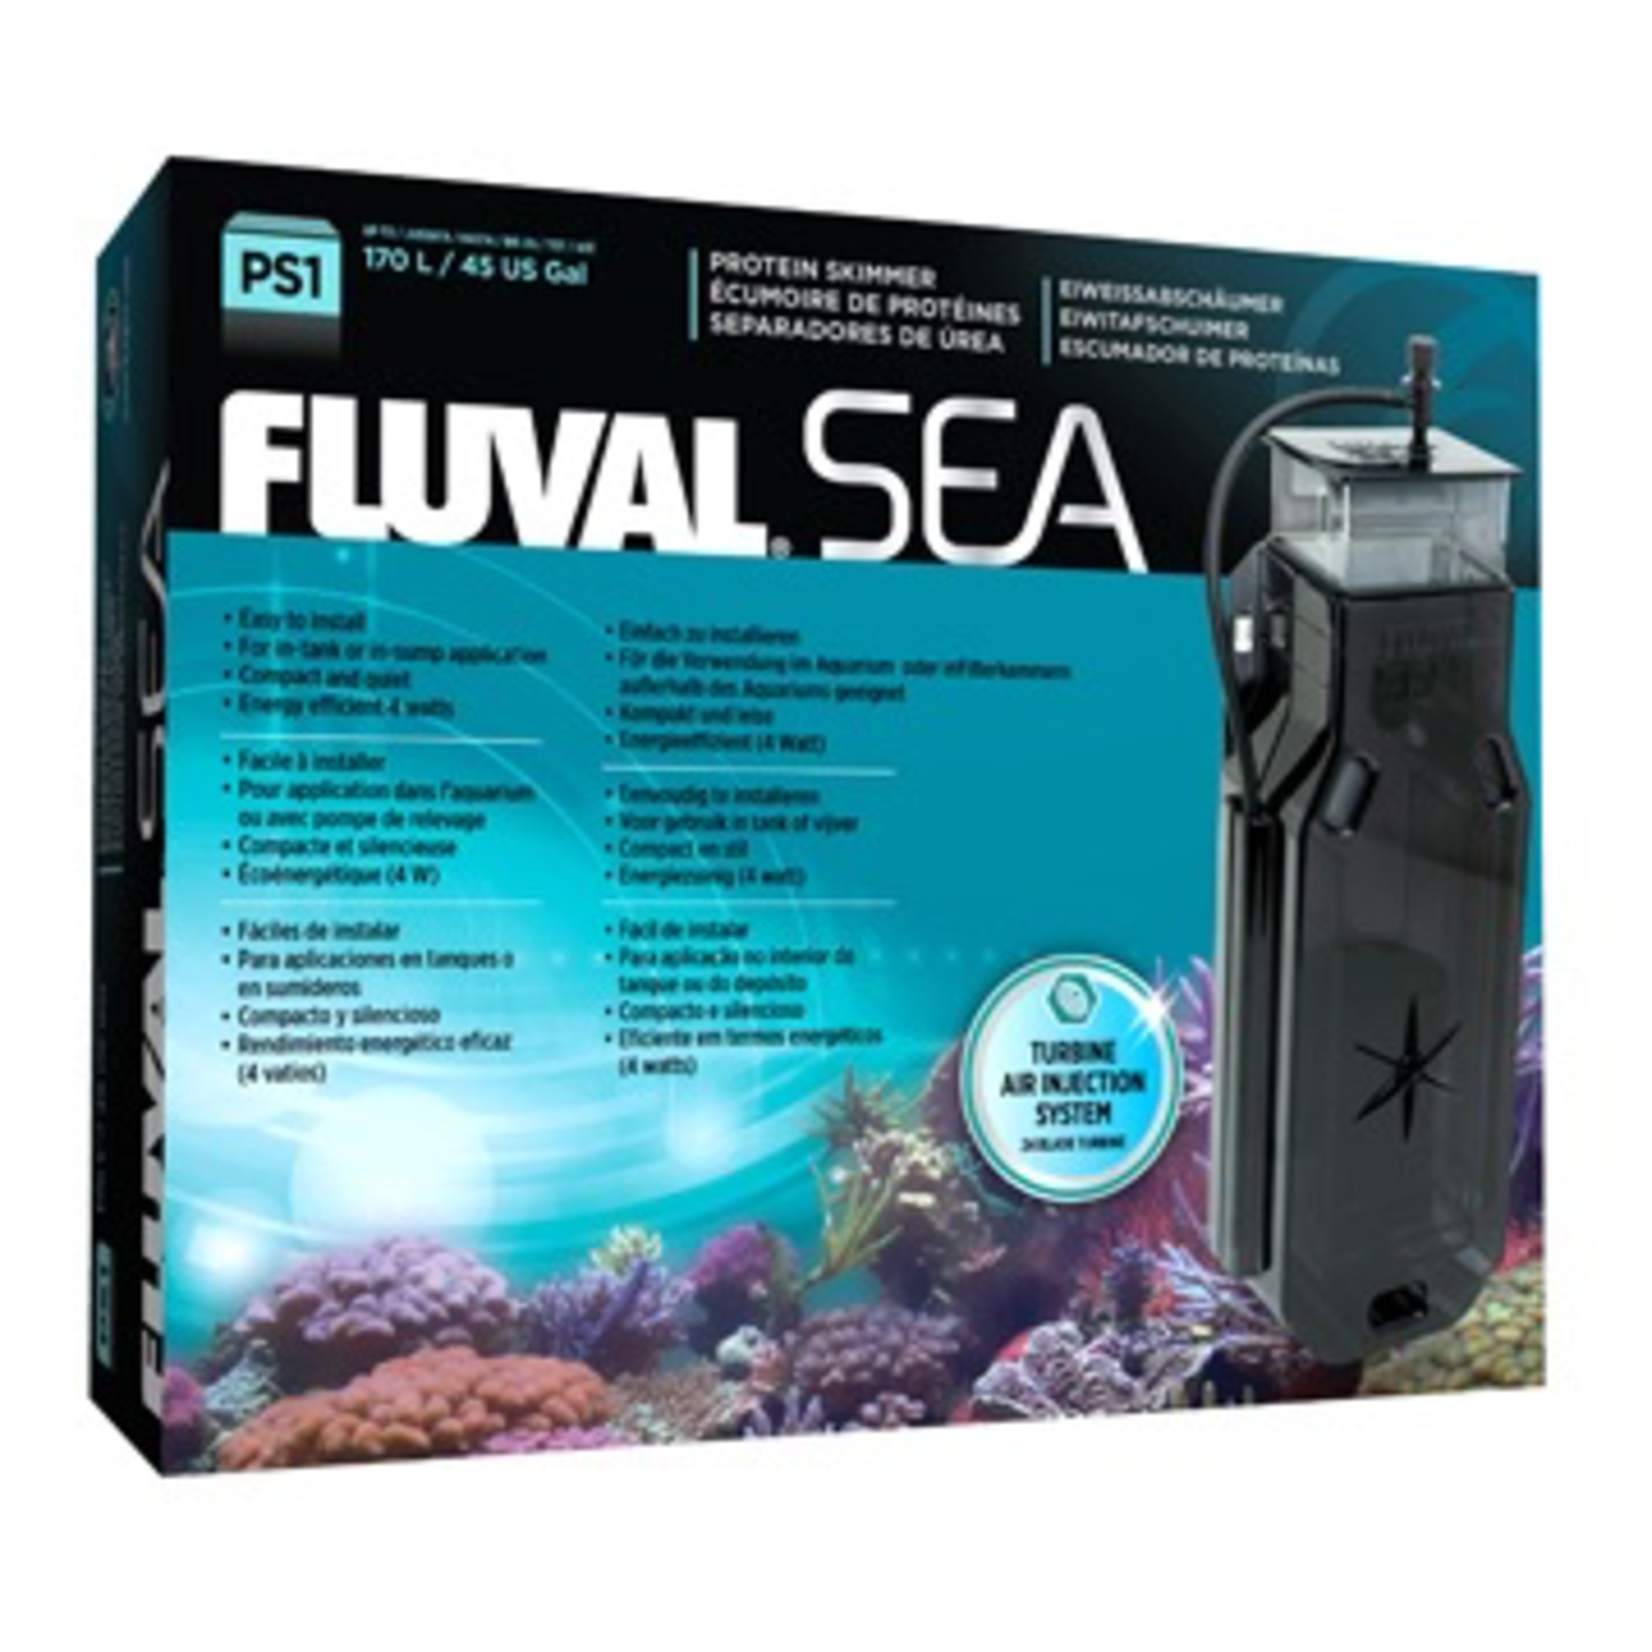 FLUVAL (W) Fluval Sea Protein Skimmer - 4 W